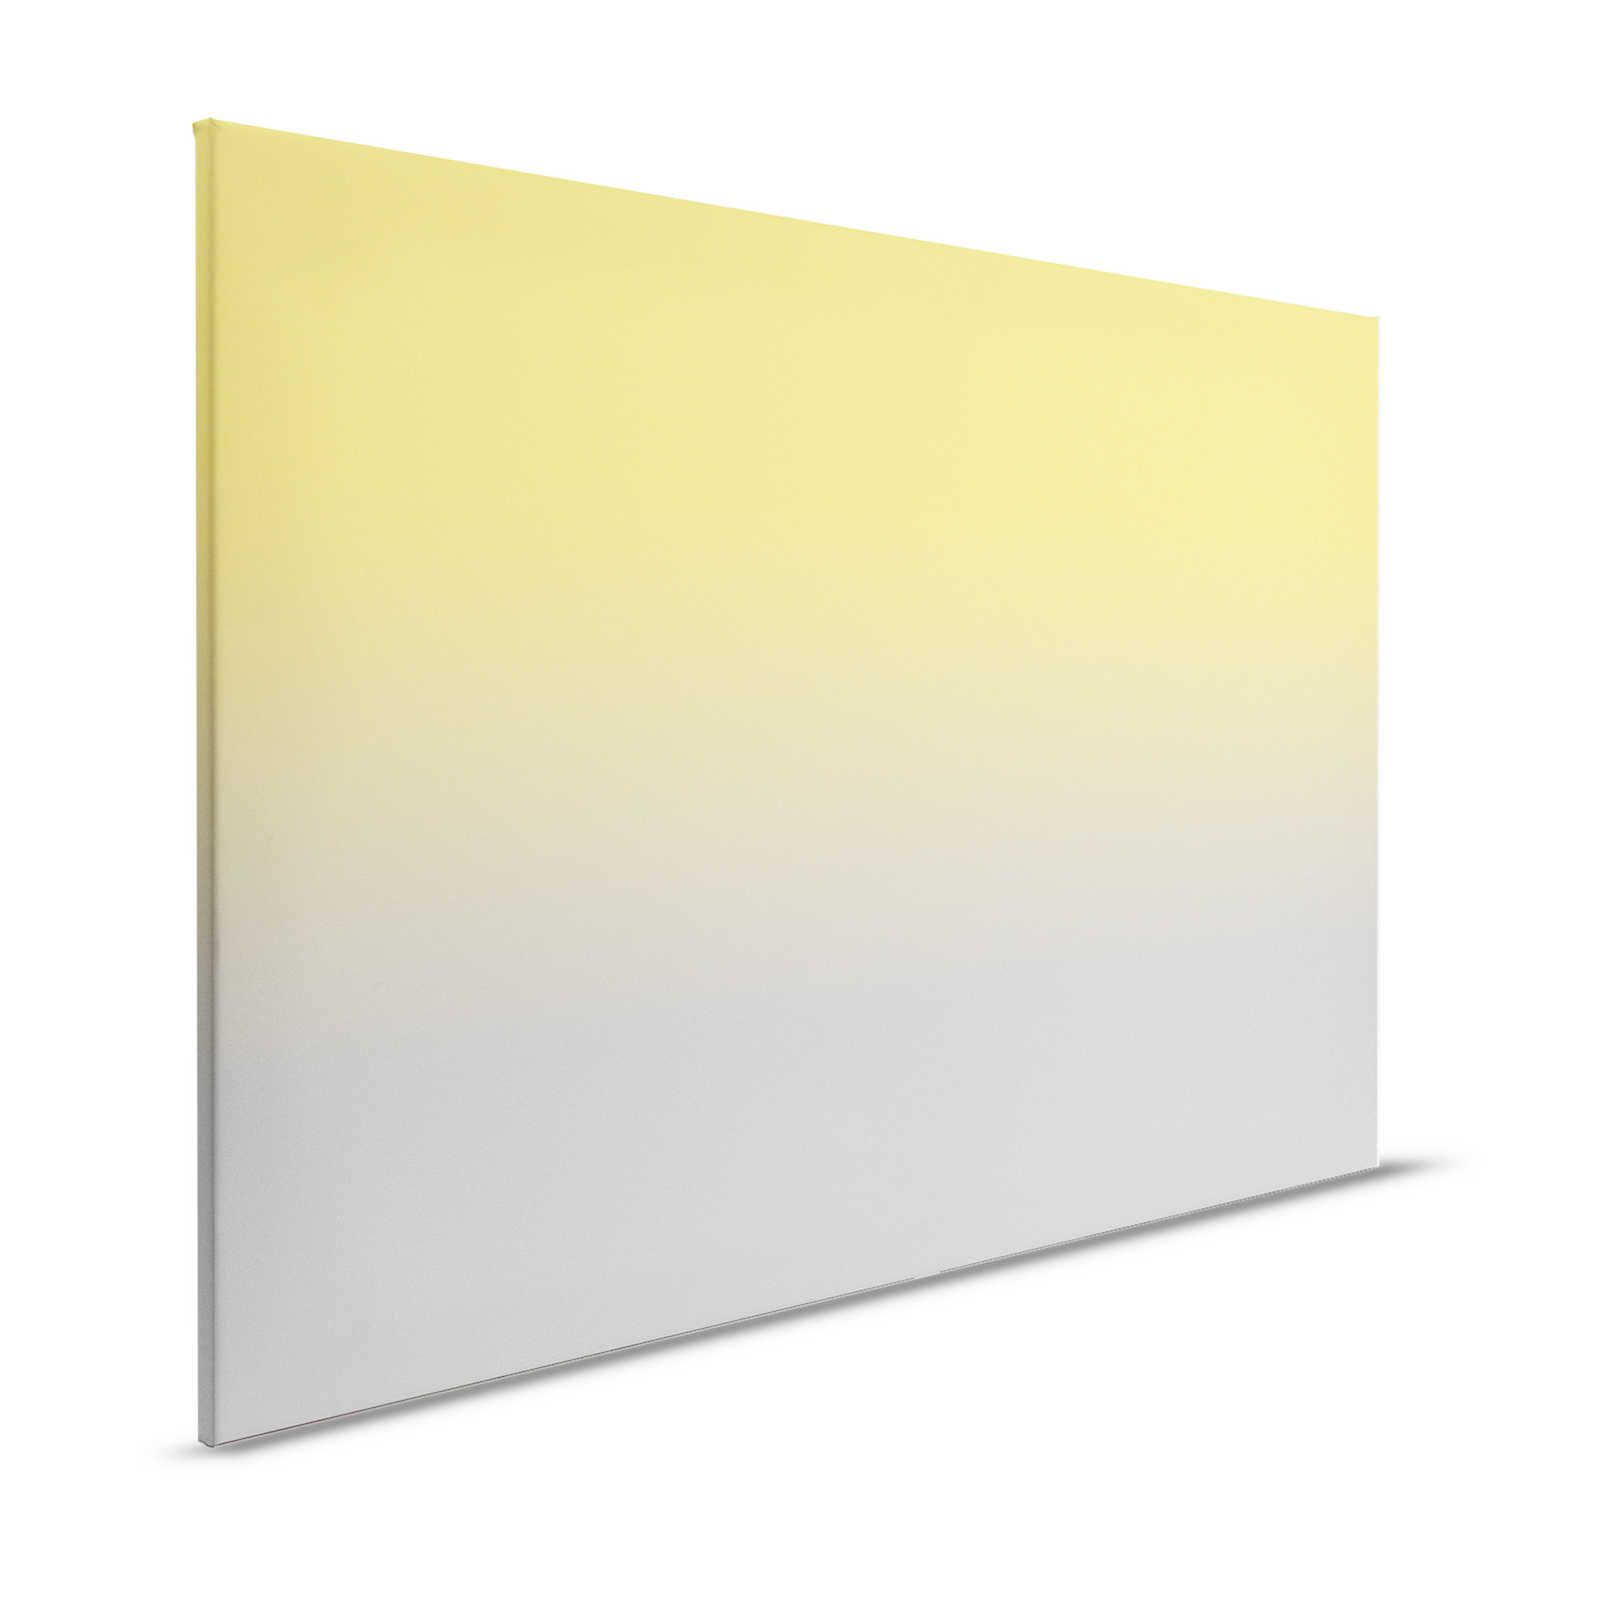 Colour Studio 1 - Leinwandbild Gelb & Grau Trendfarben Ombre Effekt – 1,20 m x 0,80 m
